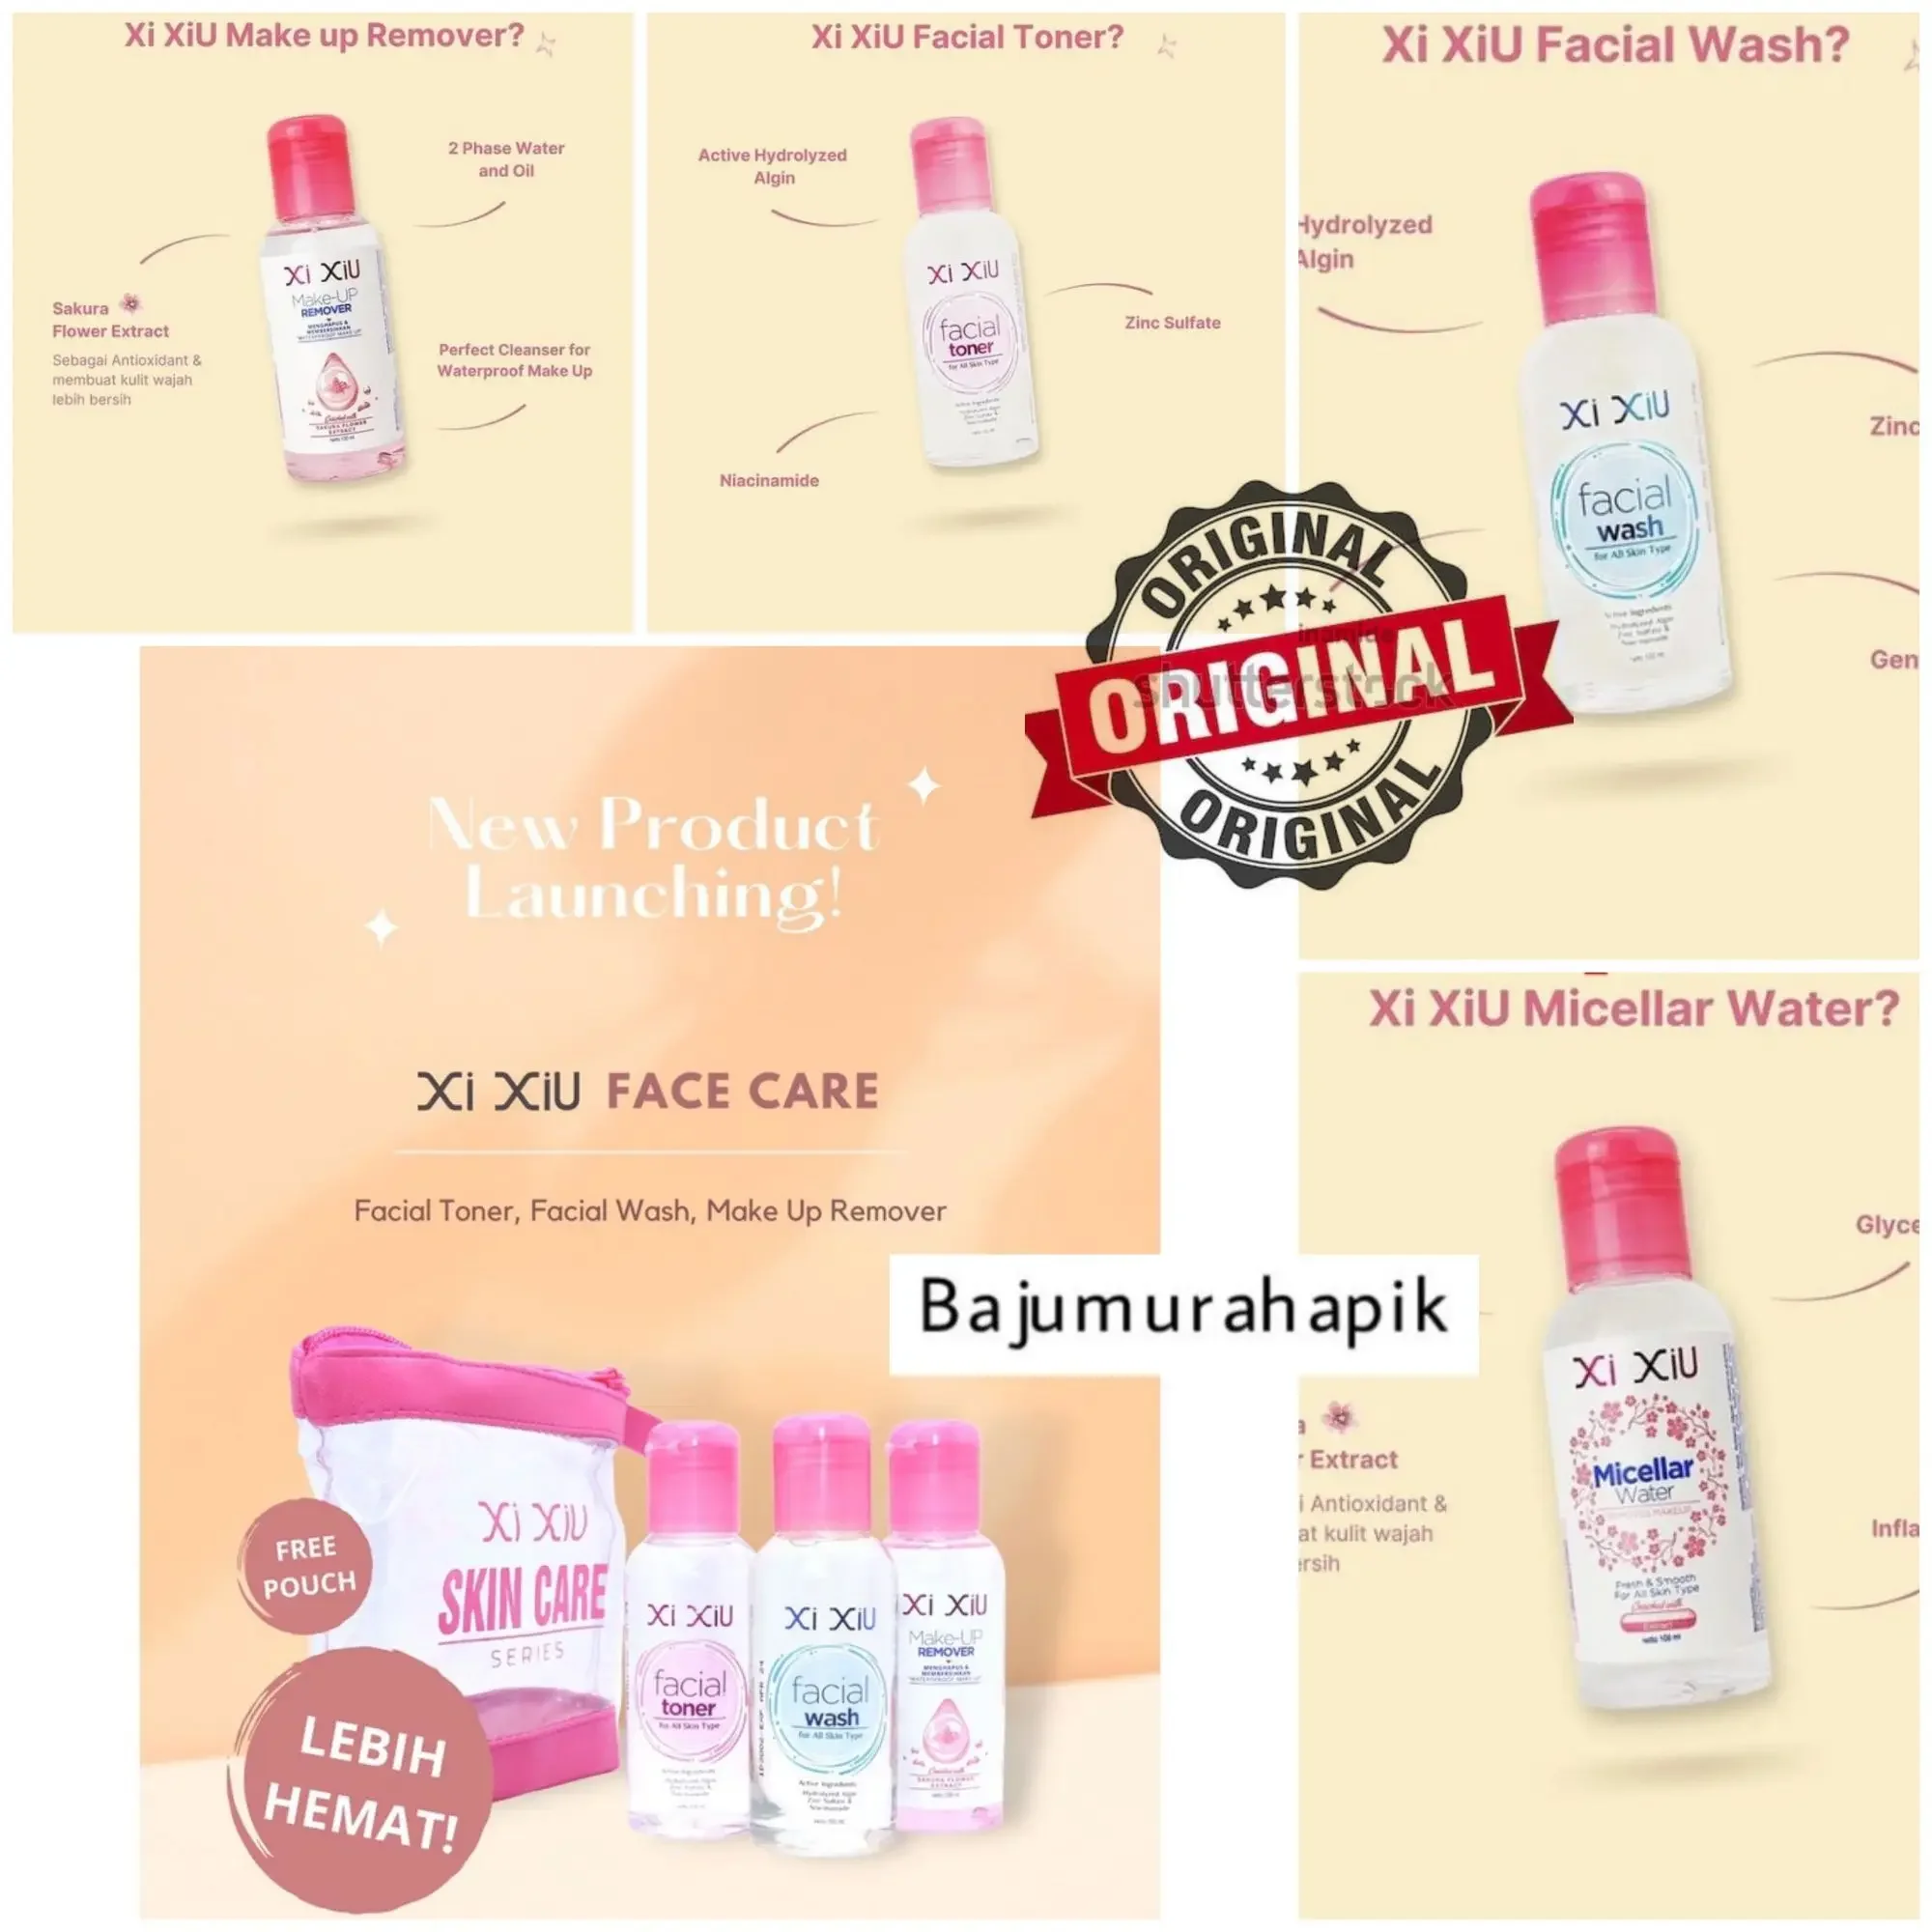 Xi Xiu Face Care/Facial Wash/Toner/Micellar Water/Make Up Remover